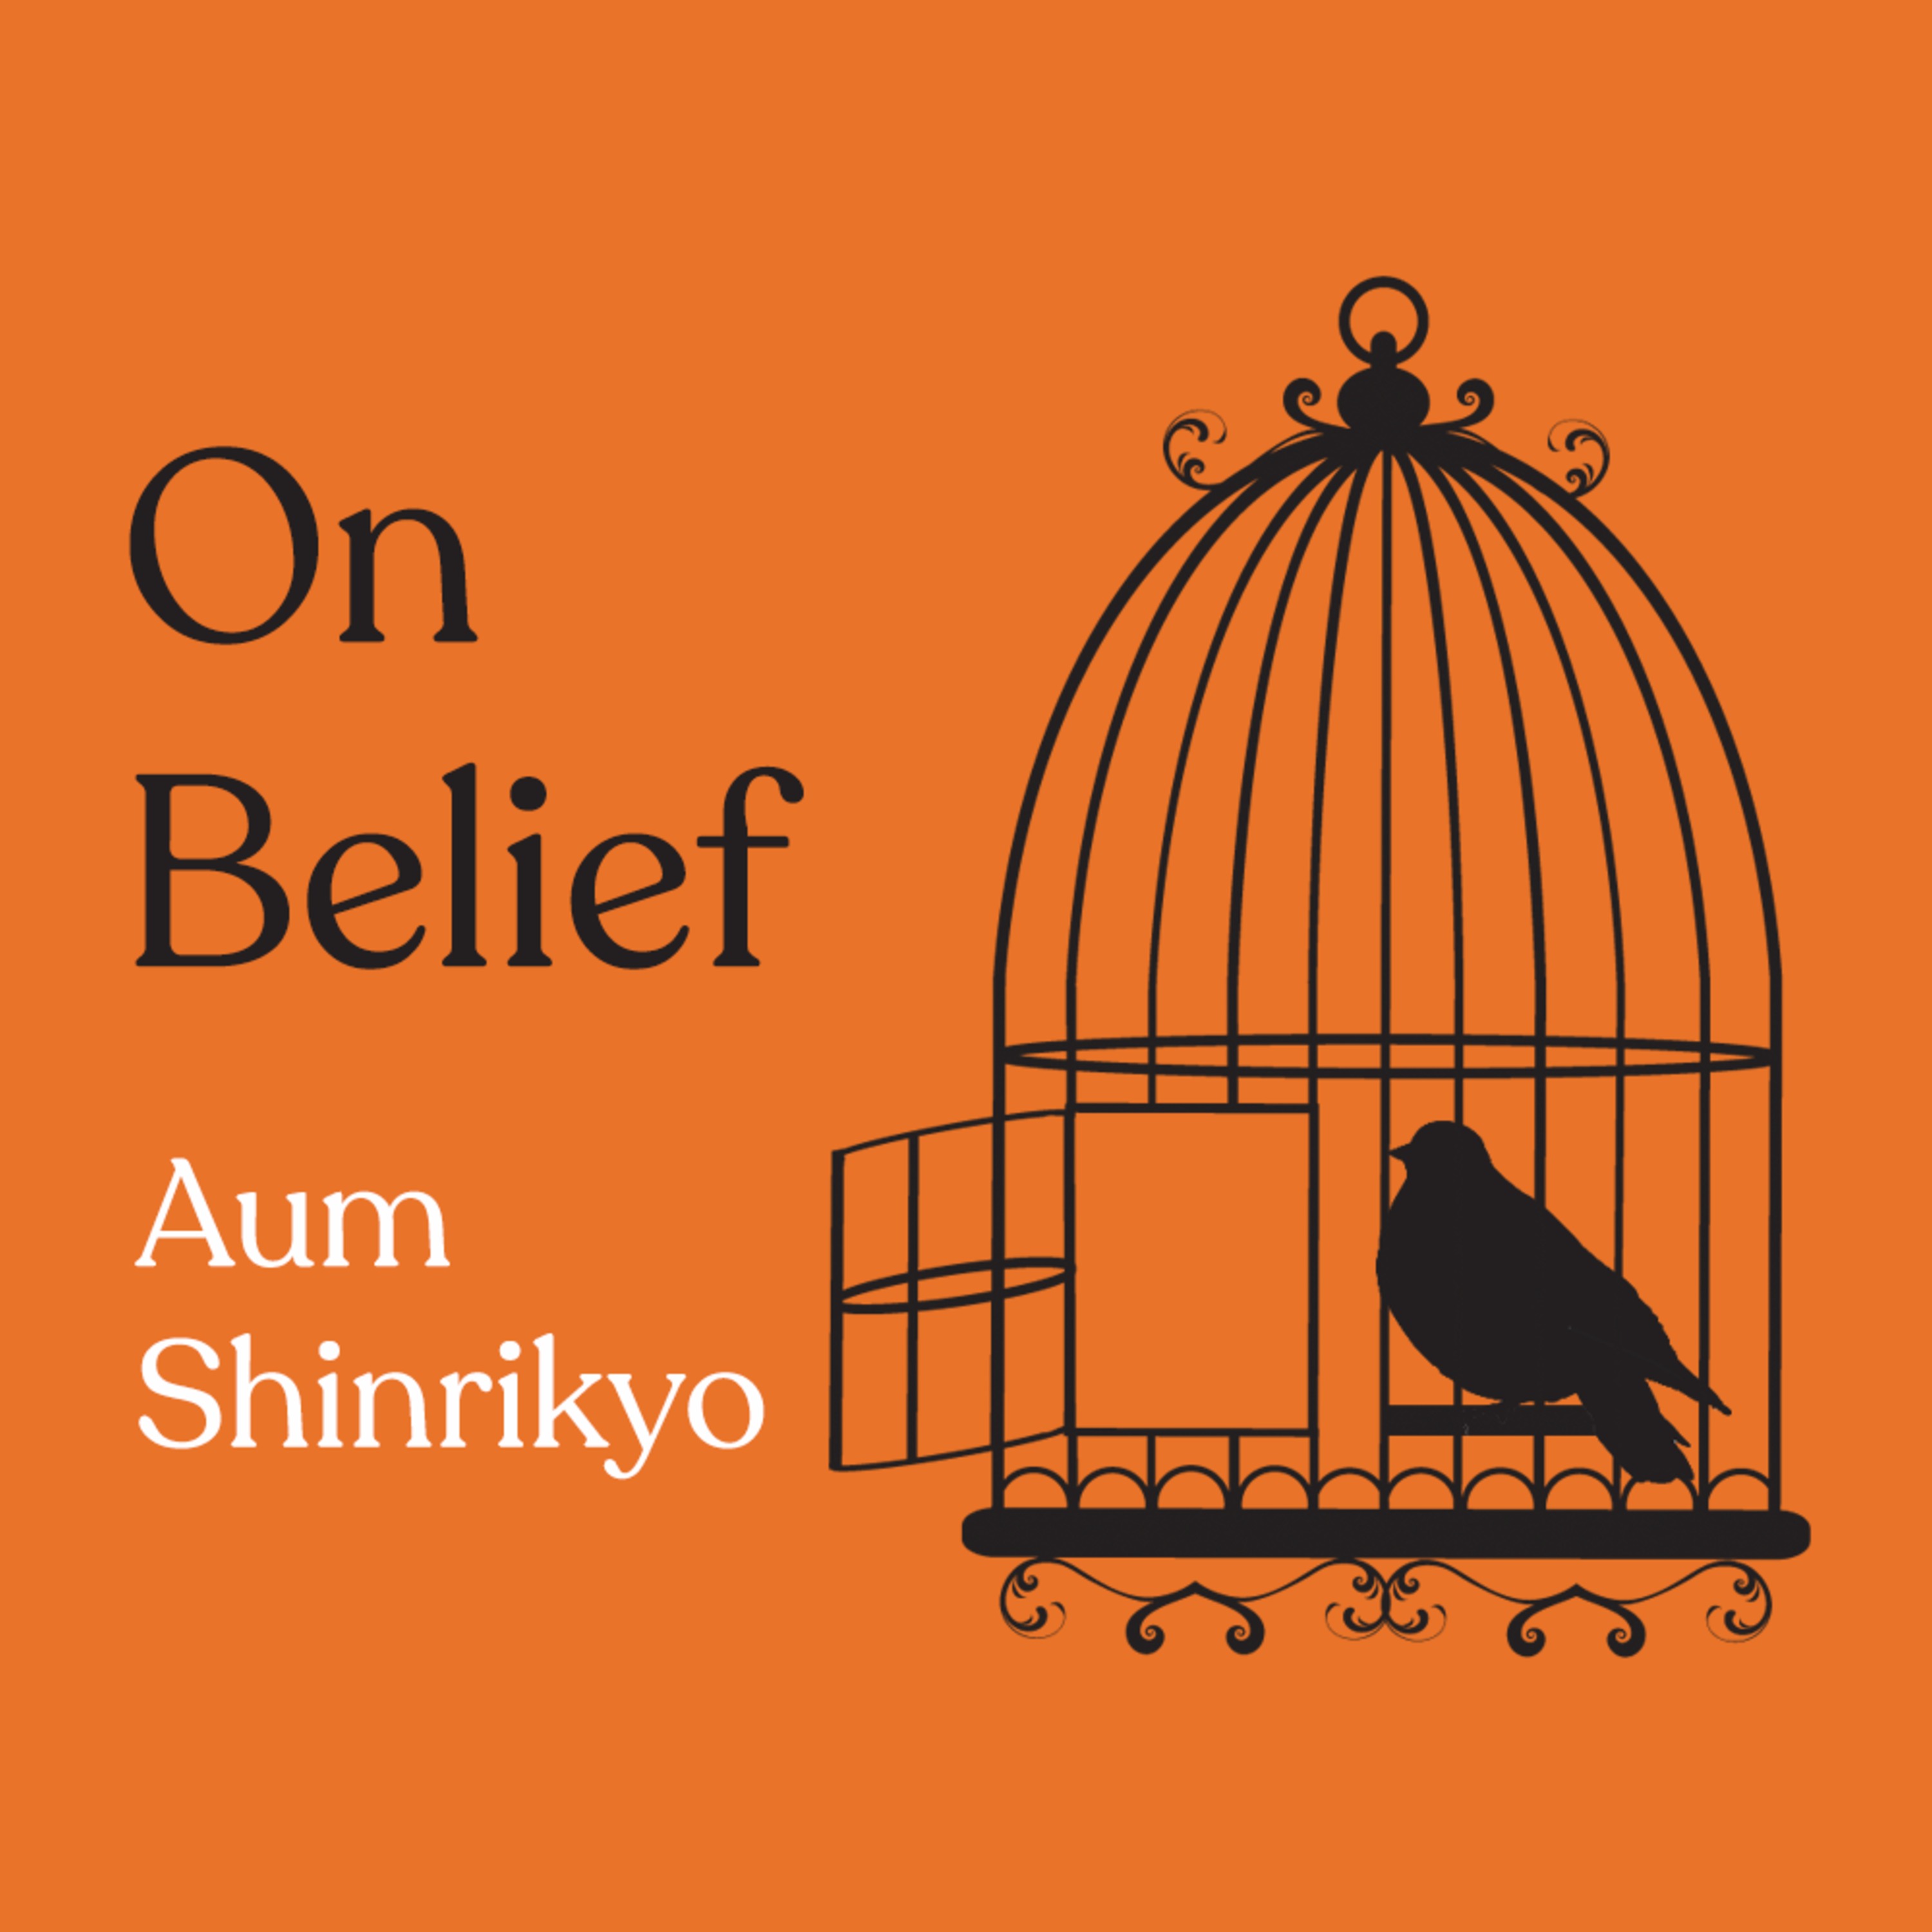 Episode 104: Aum Shinrikyo with Guest Sarah Hightower